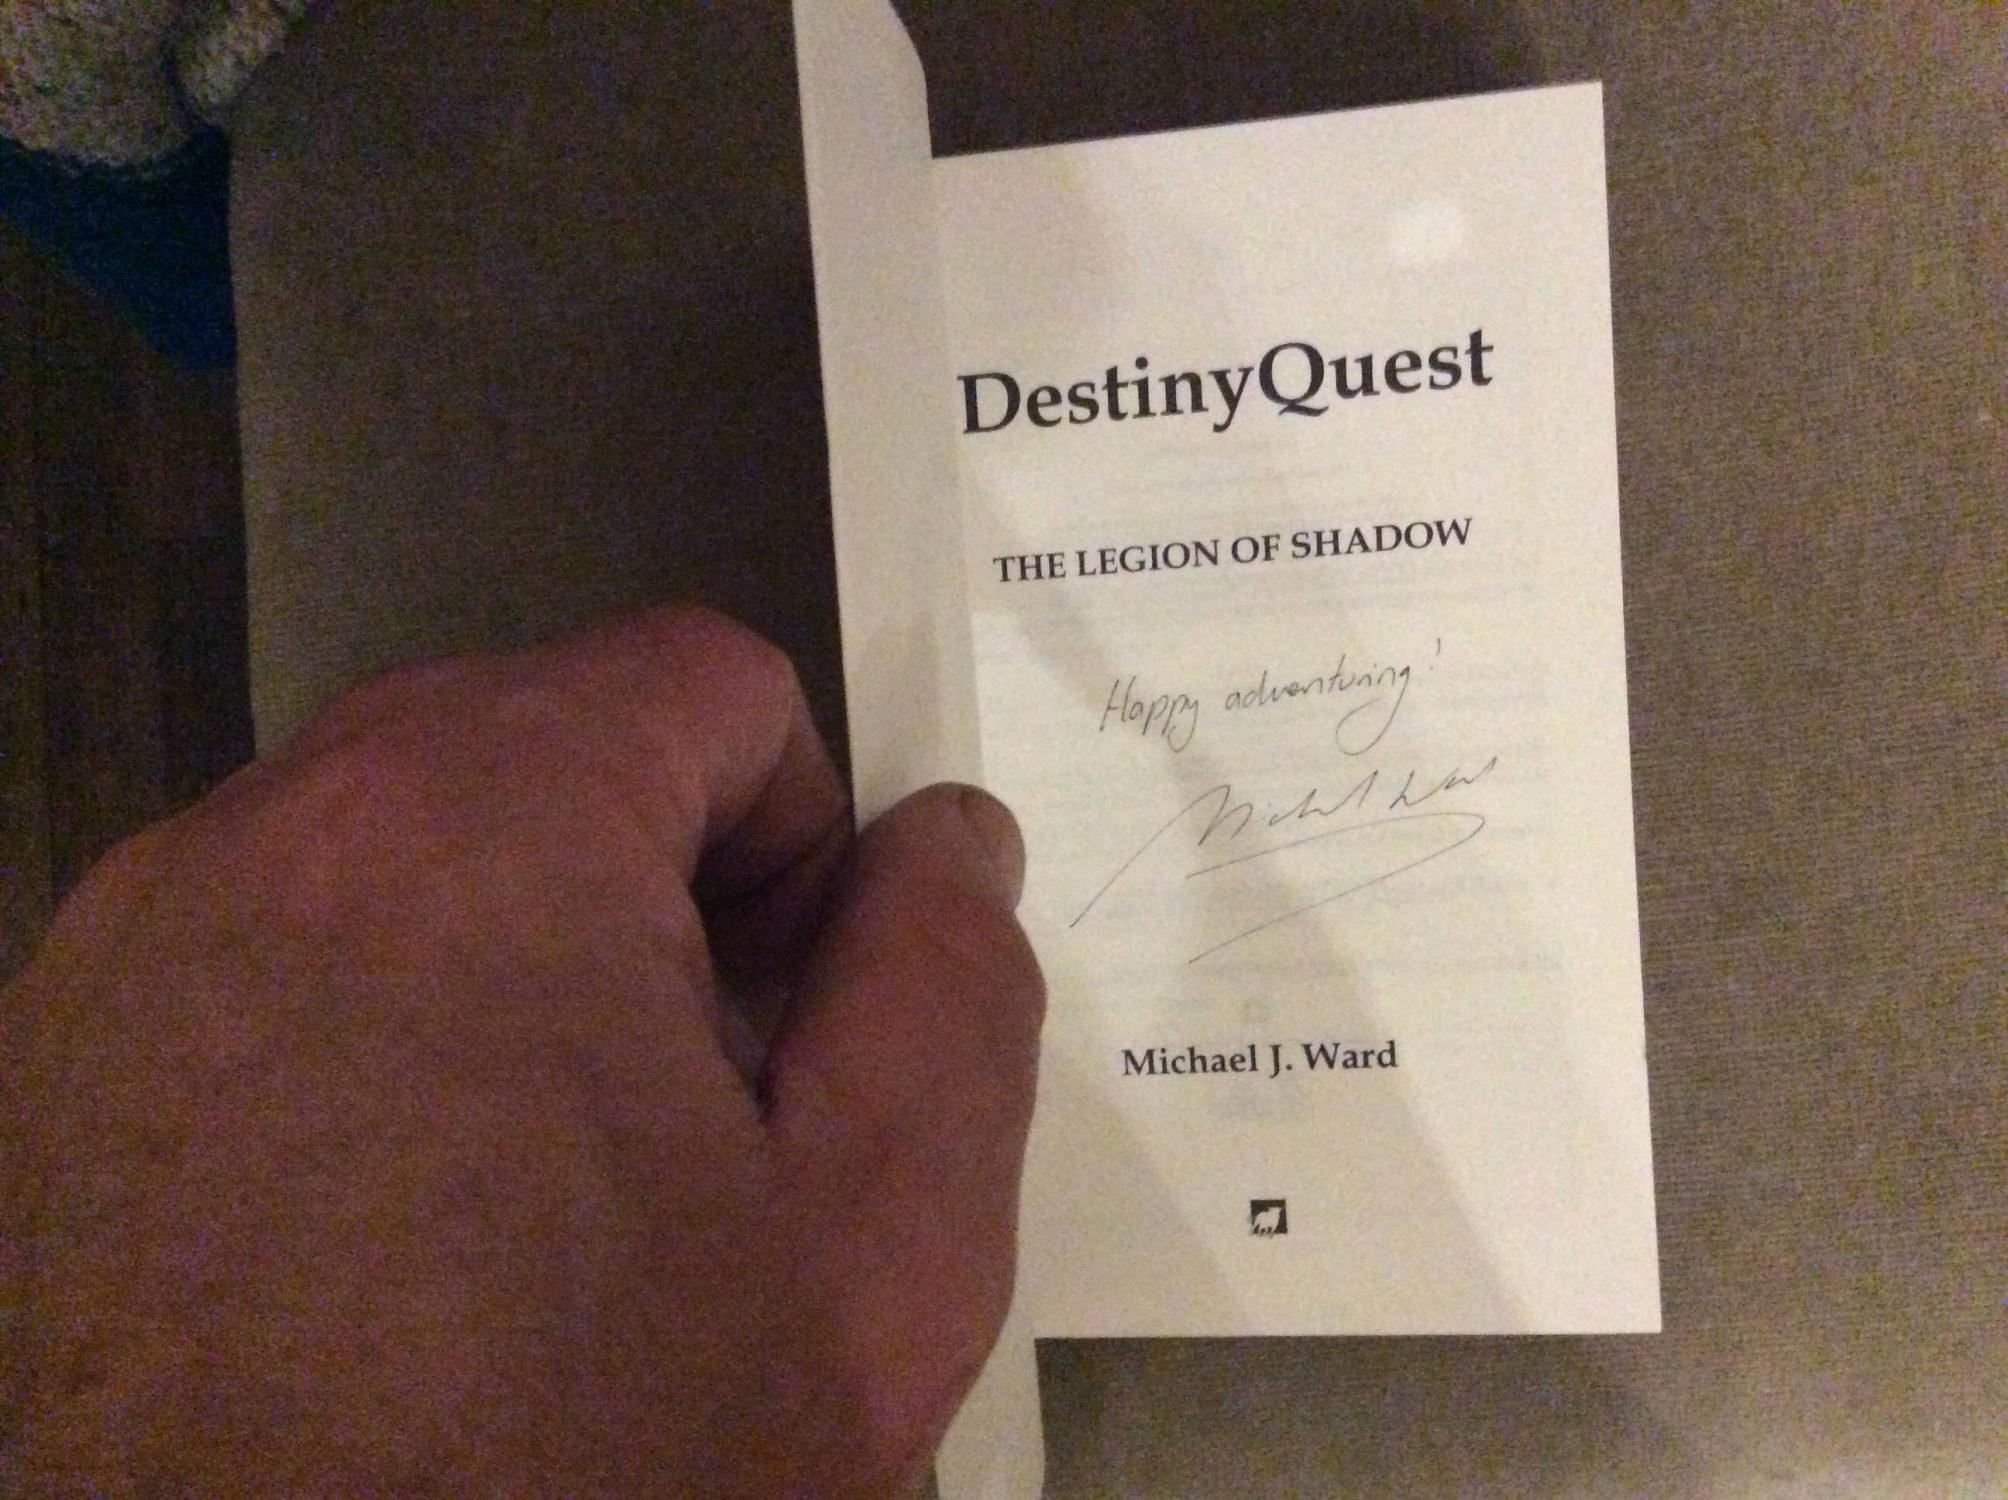 The Legion of Shadow DestinyQuest Destiny Ques... by Michael J. Ward Paperback 